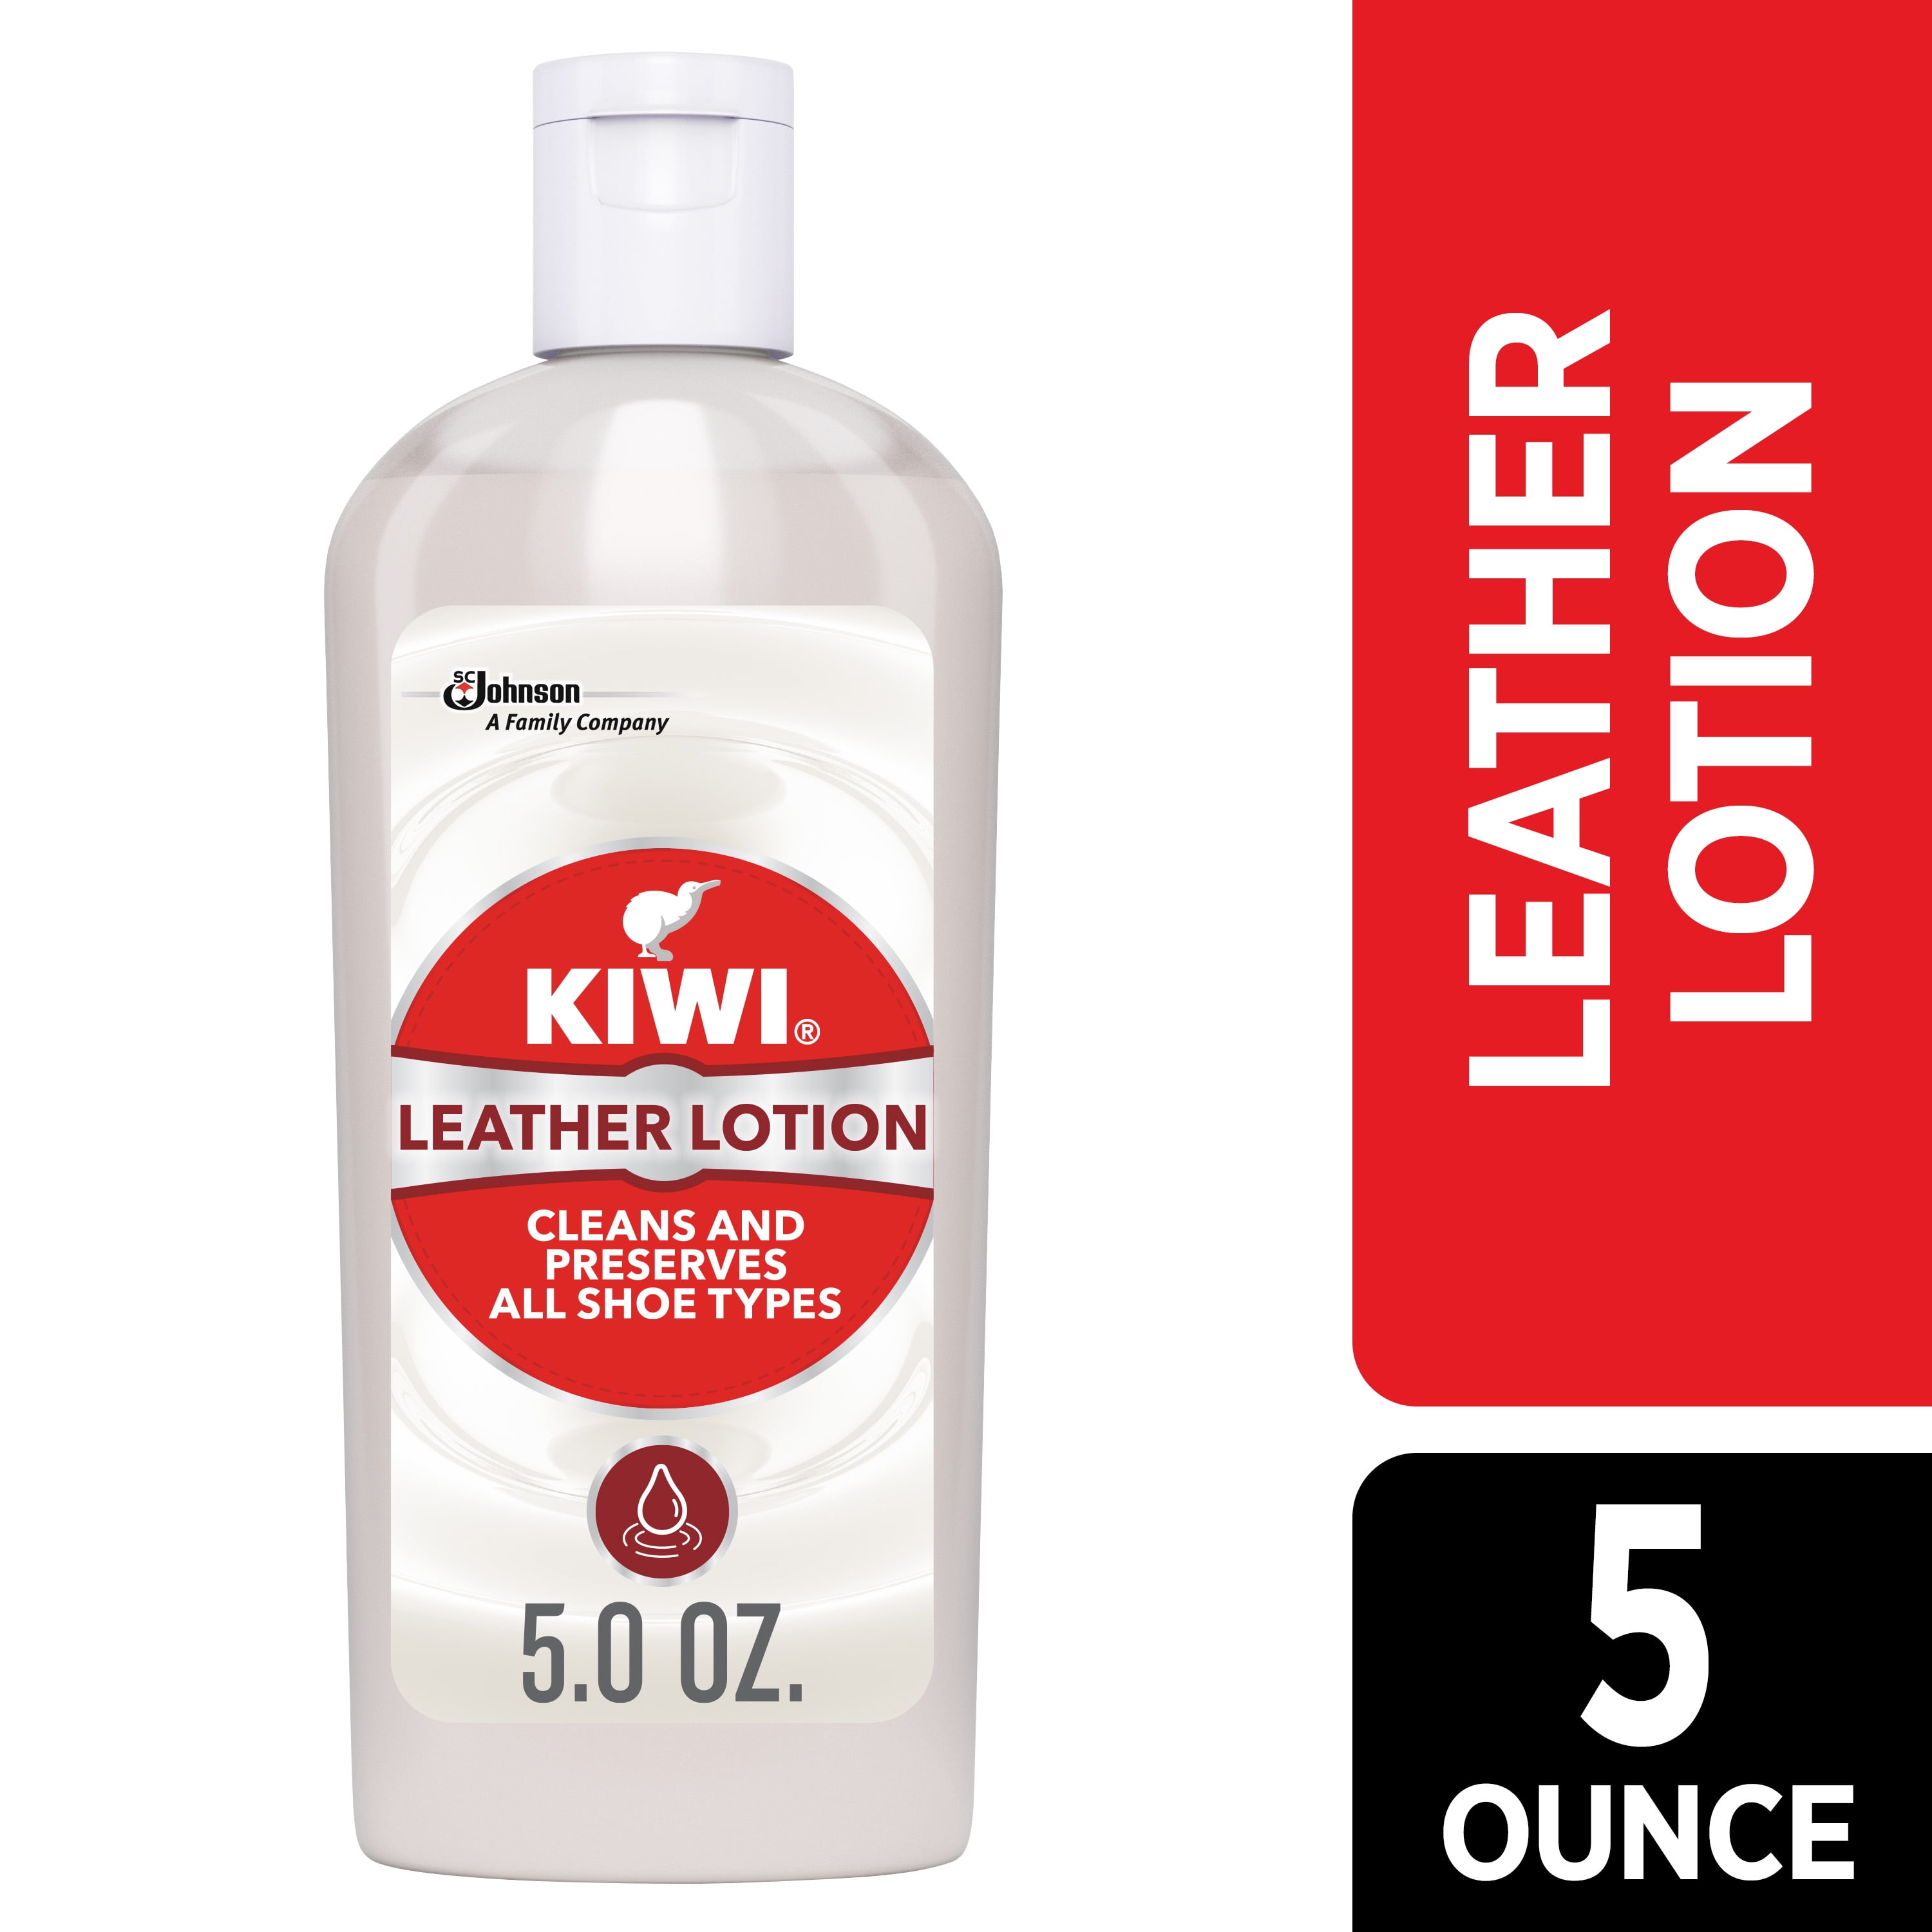 Kiwi Leather Saddle Soap and Conditioning Oil - Walmart.com